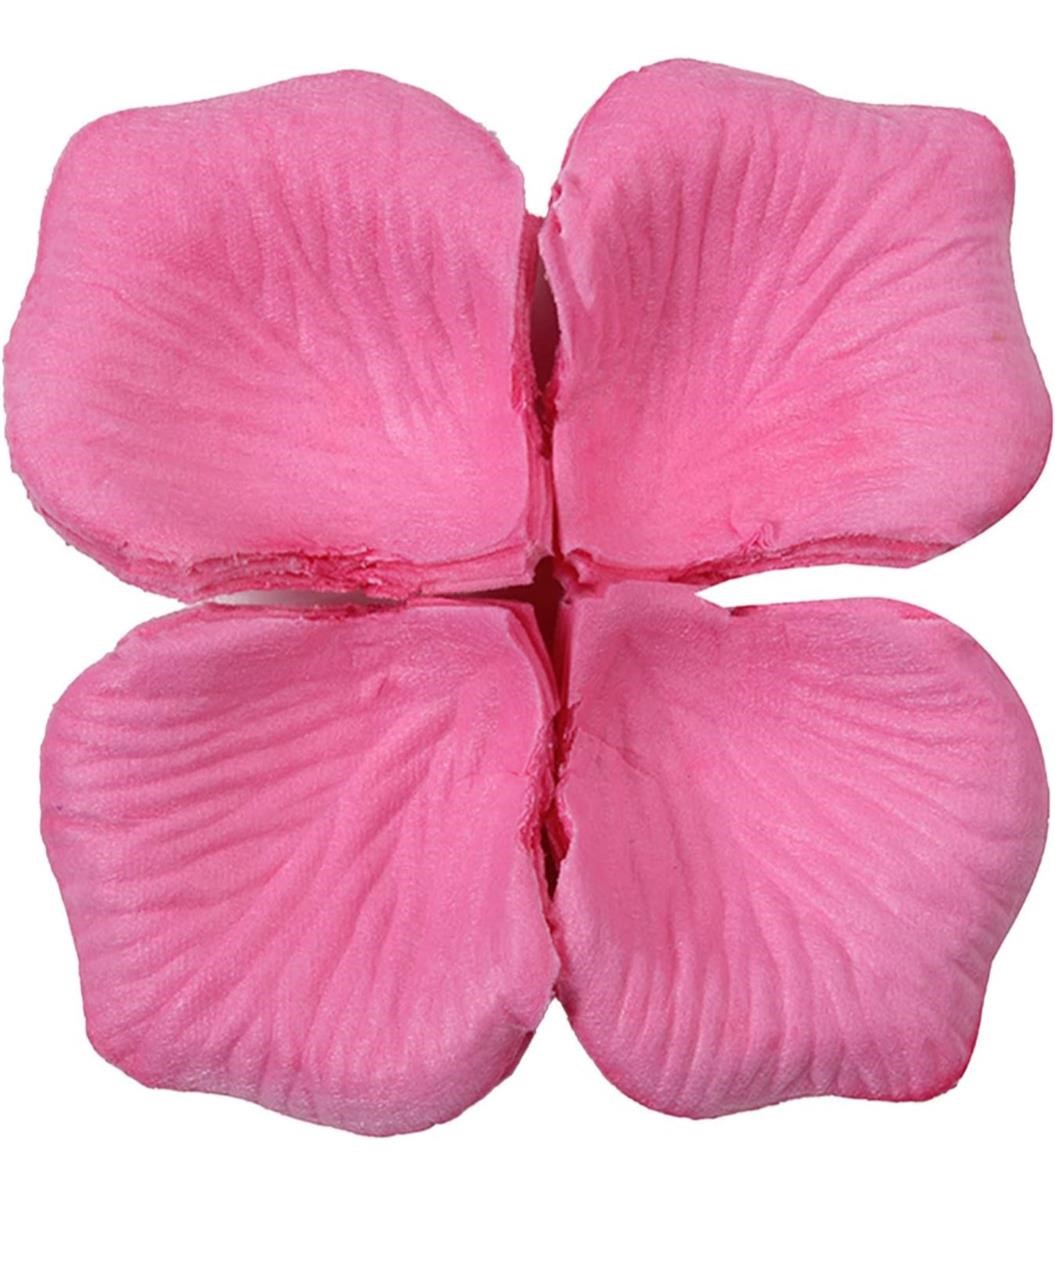 100 Pieces Colorful Silk Artificial Rose Petal